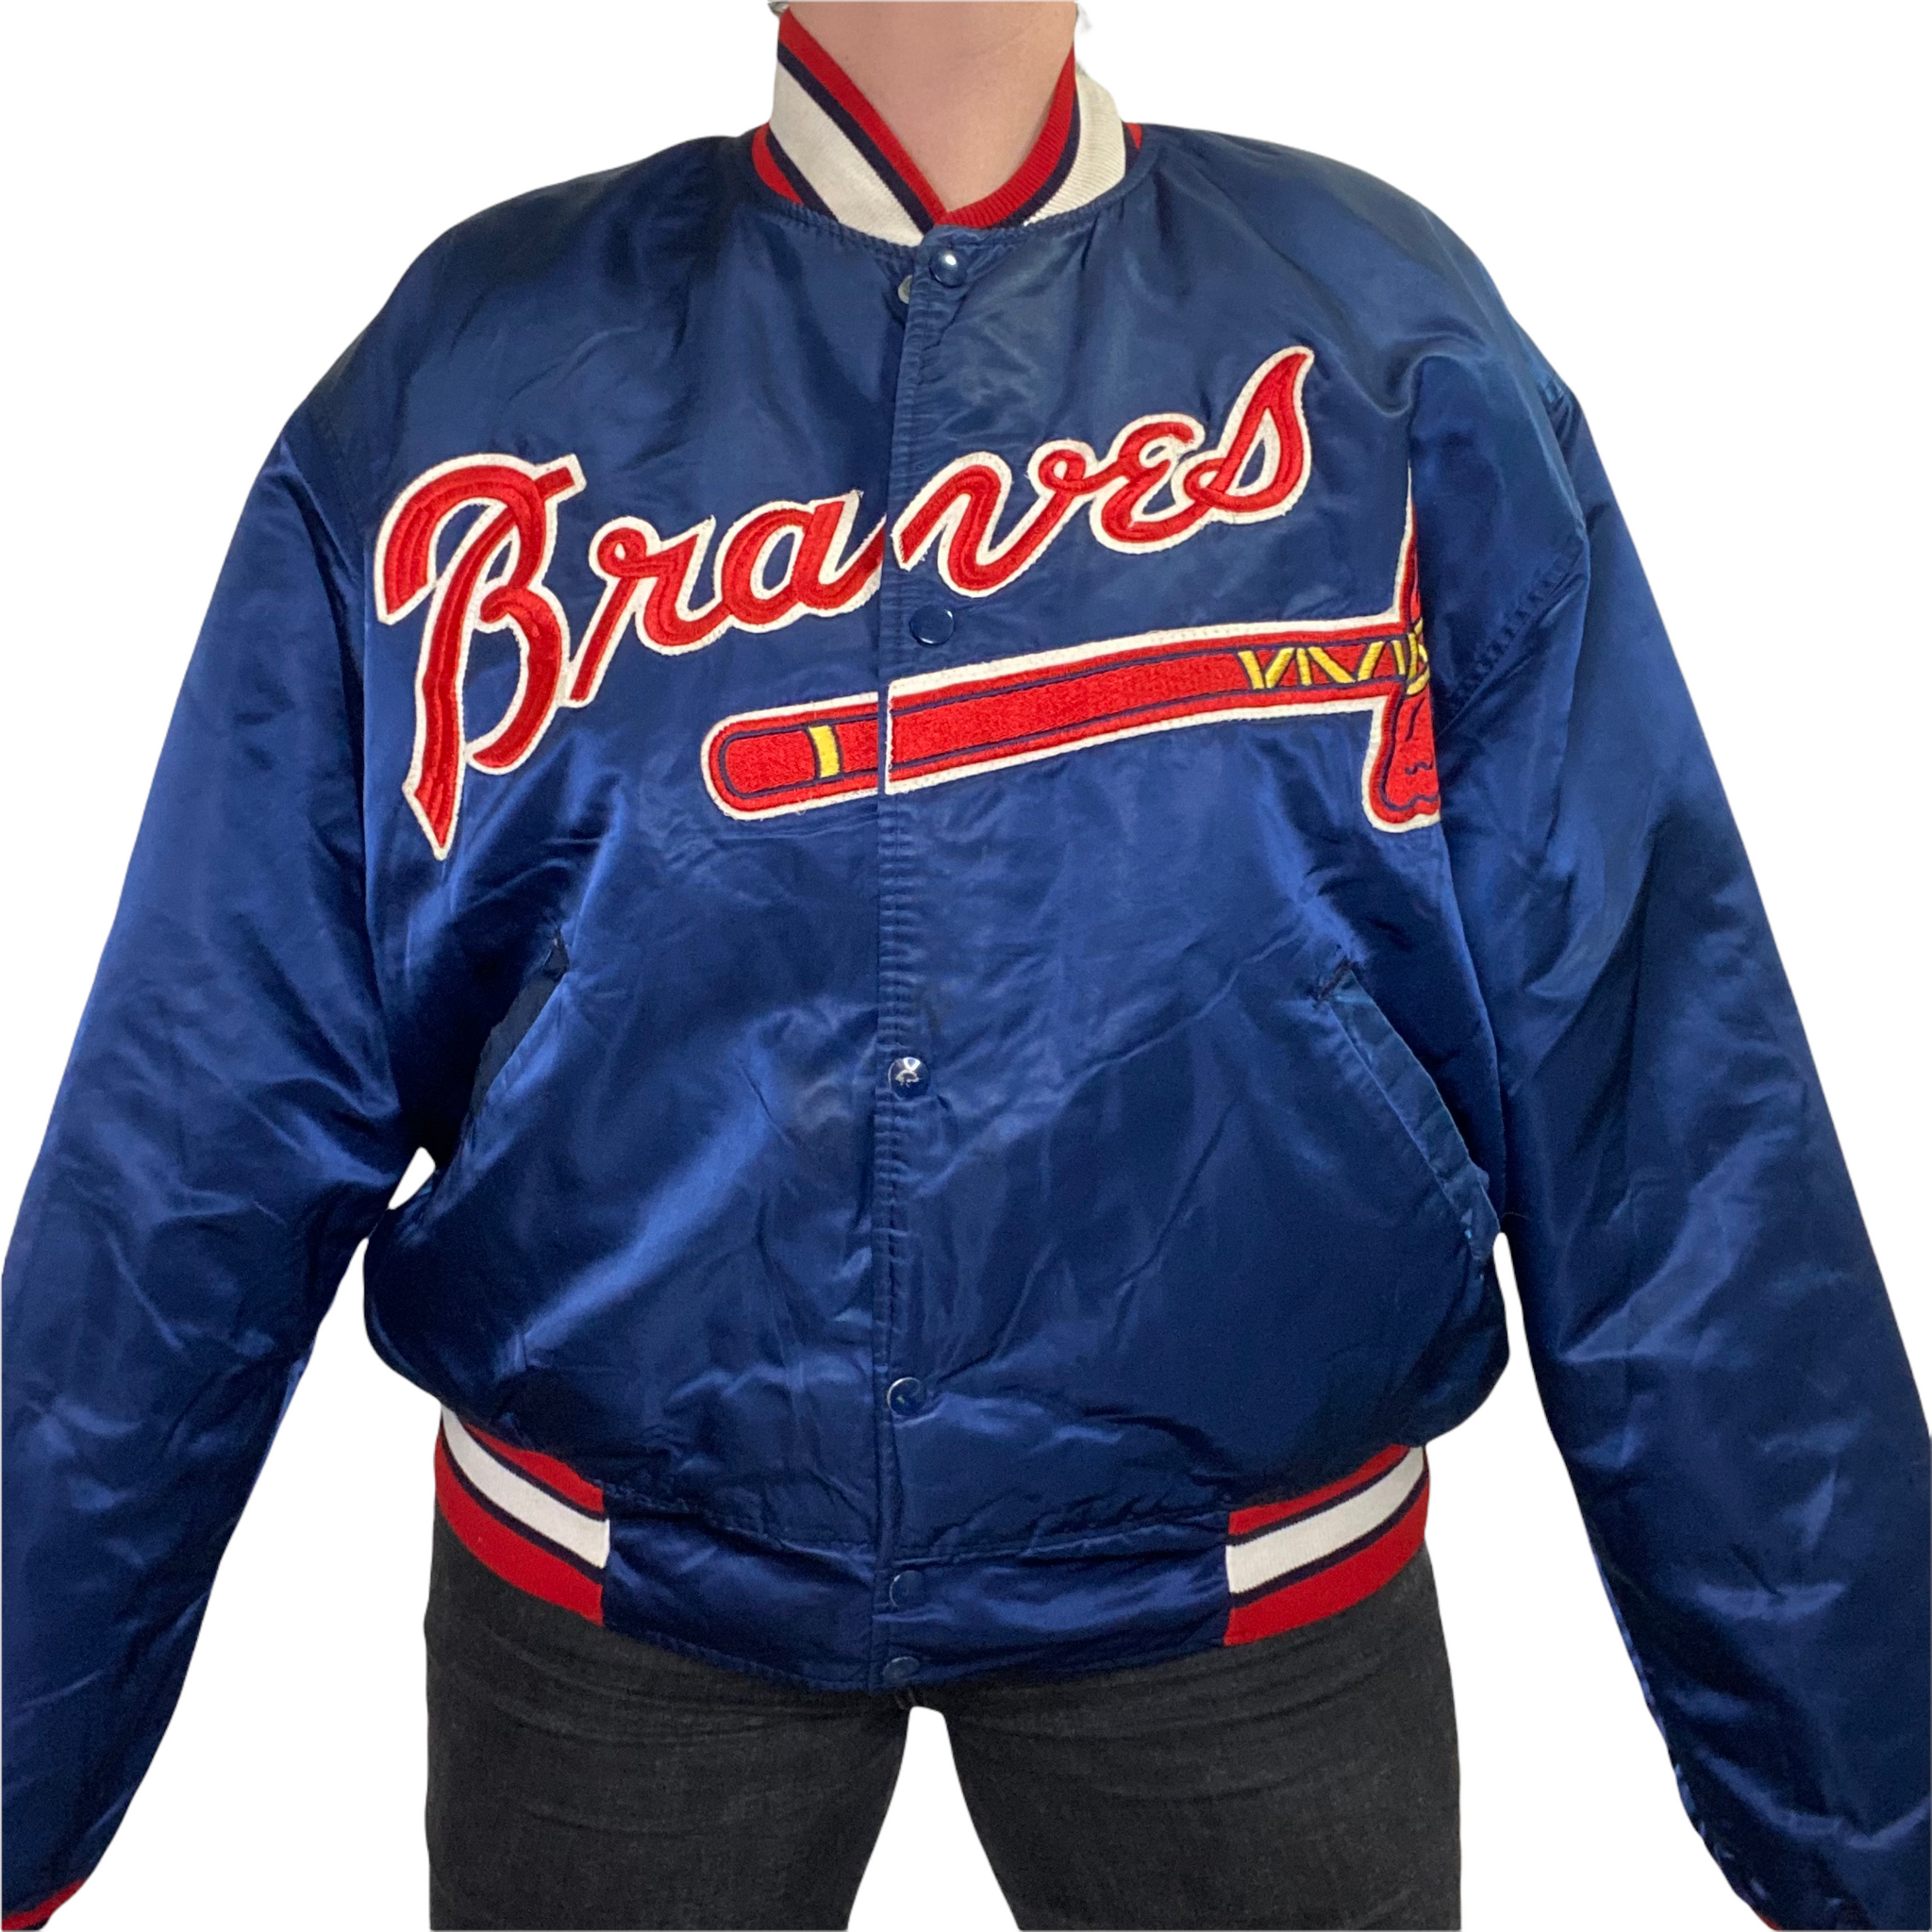 90's braves starter jacket